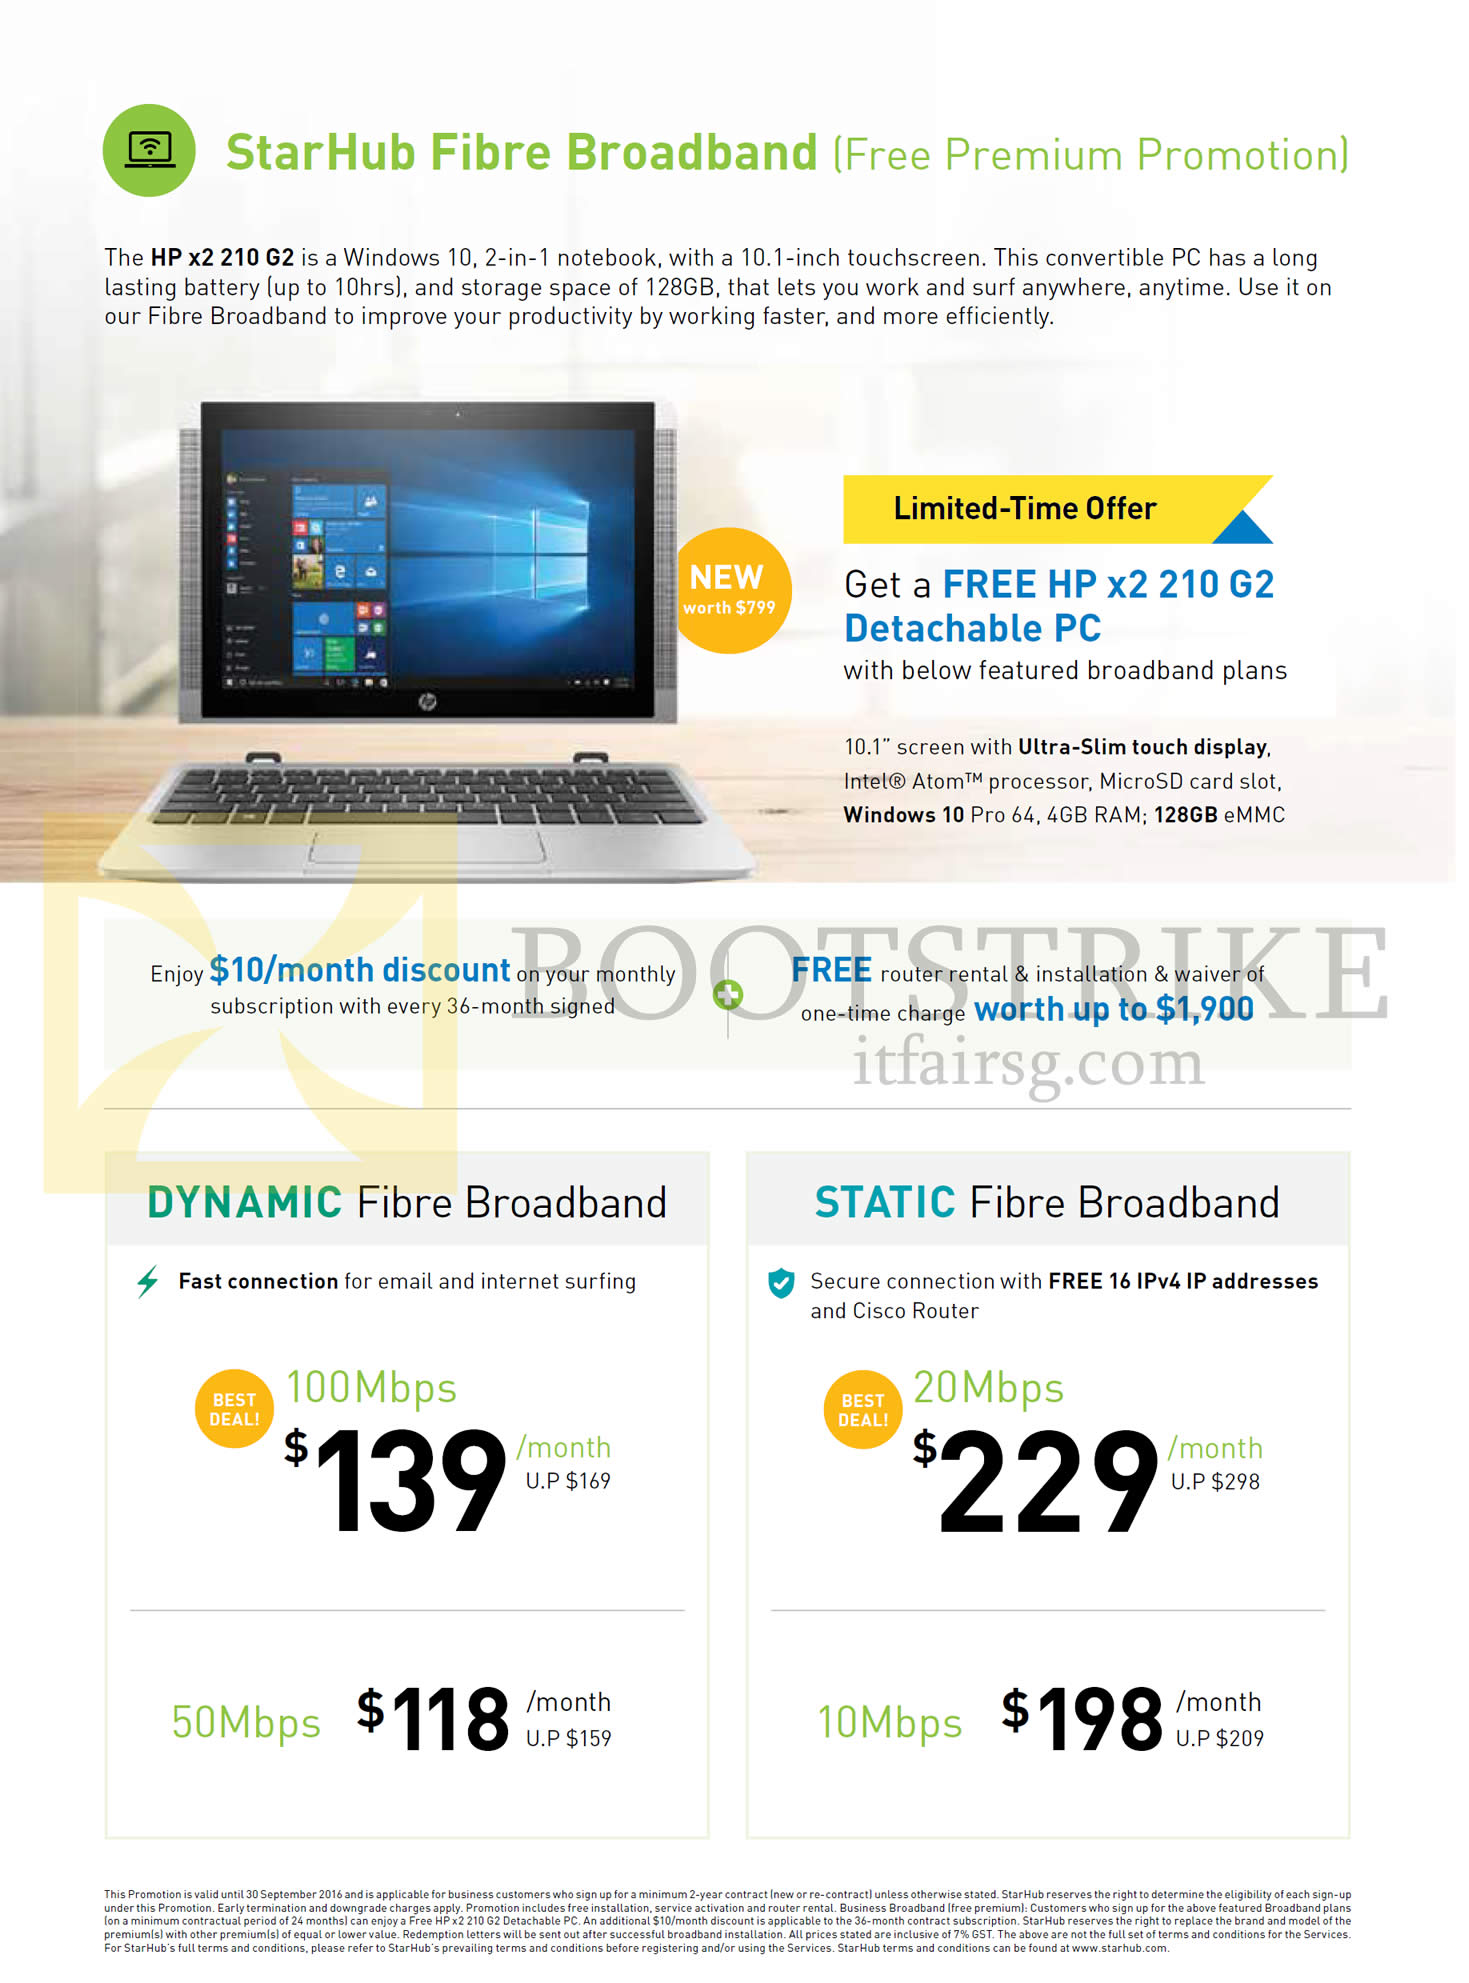 COMEX 2016 price list image brochure of StarHub Business Fibre Broadband 139.00 Dynamic Fibre, 229.00 Static Fibre